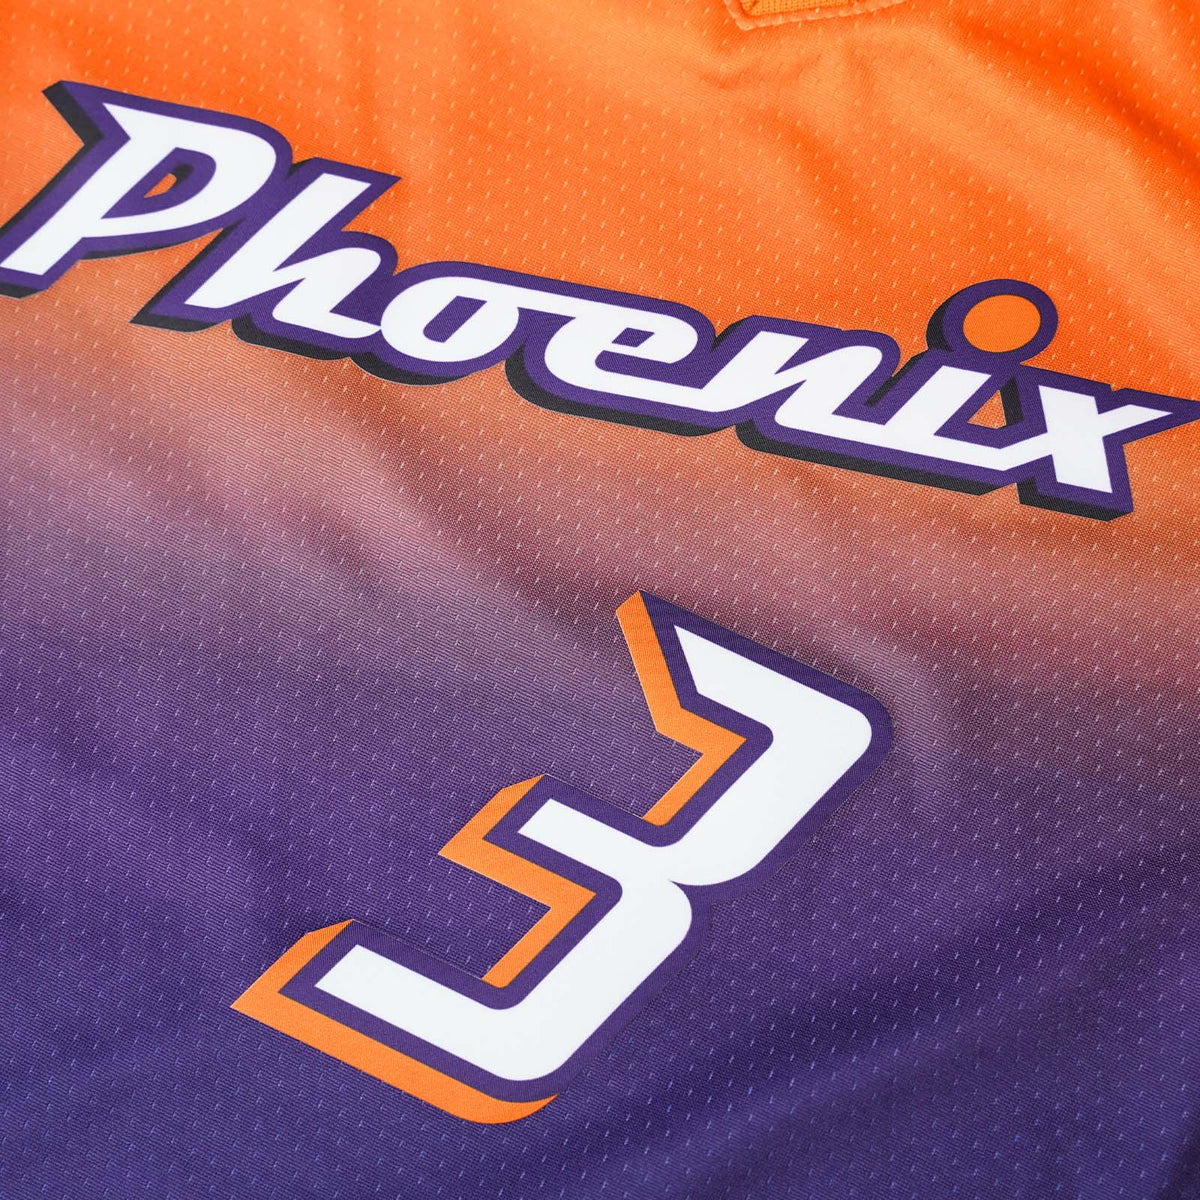 Diana Taurasi Game Issued Phoenix Mercury Adidas WNBA Jersey Size M